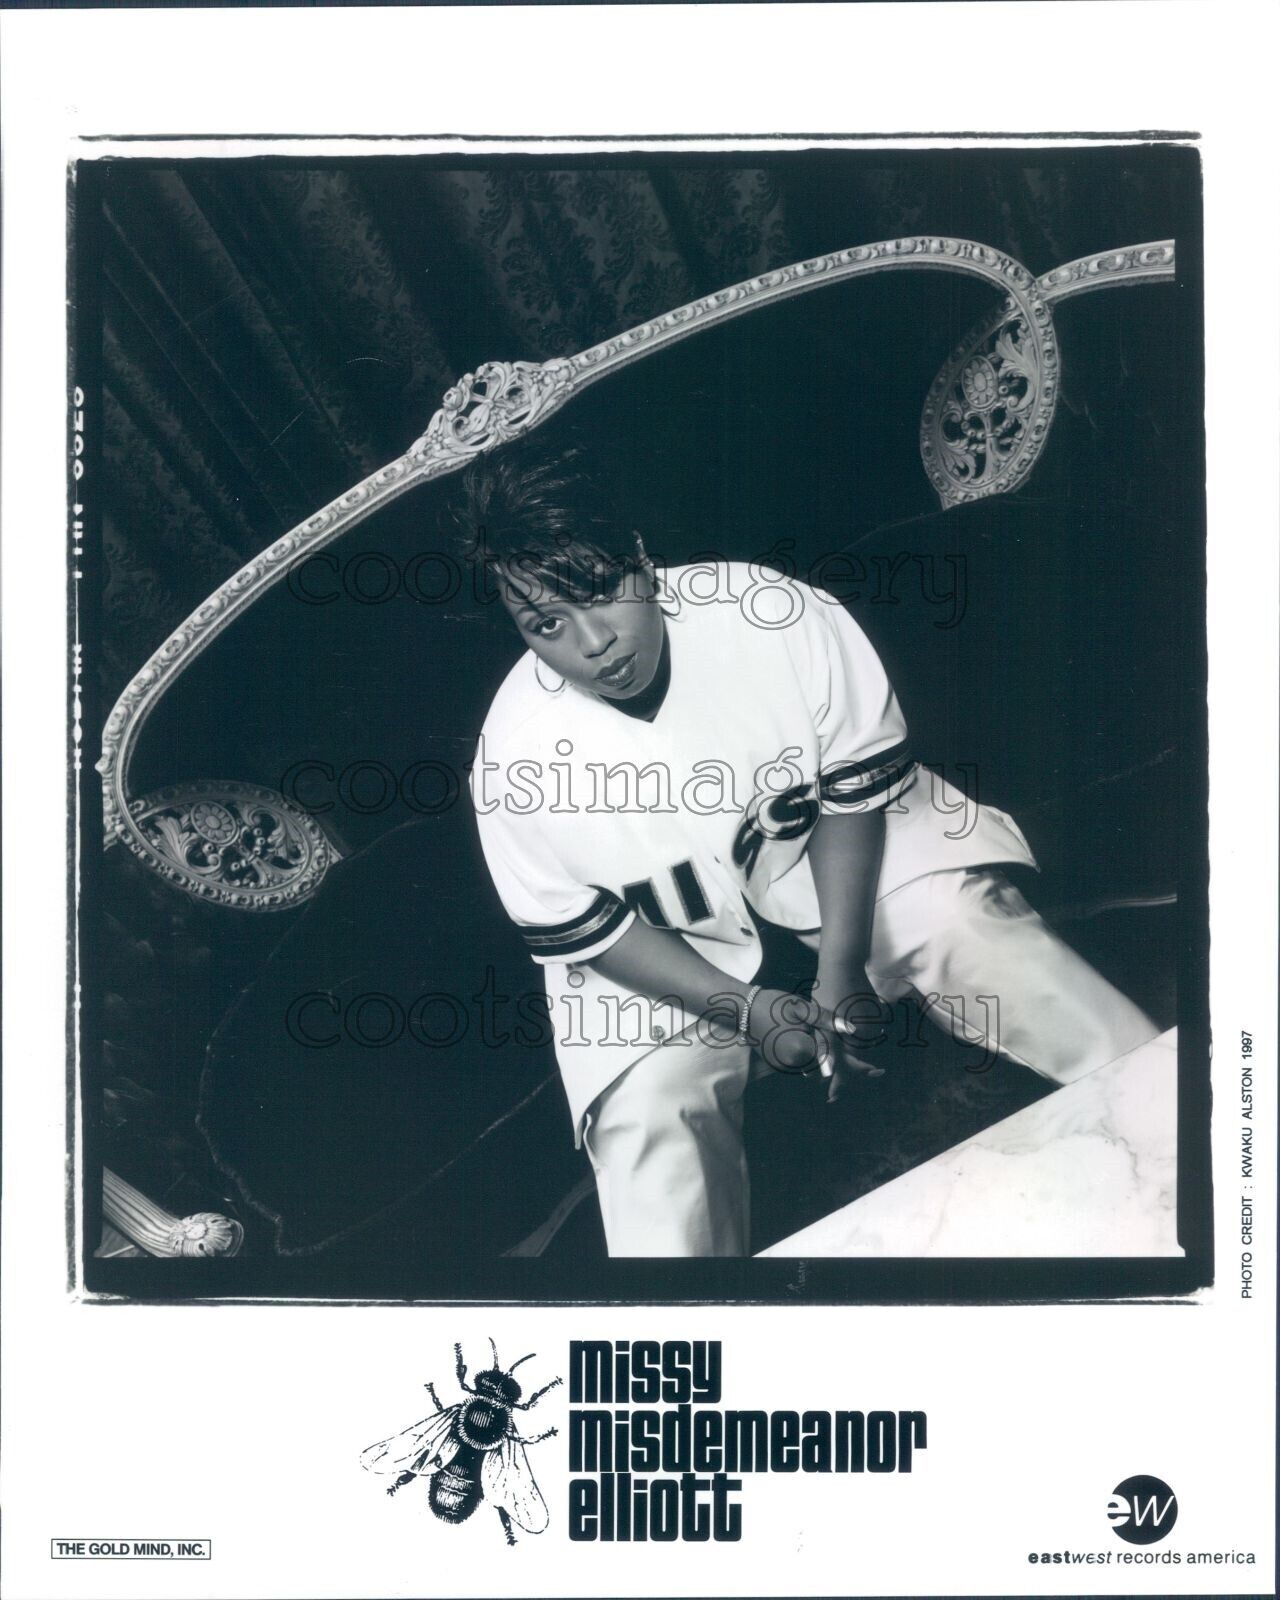 1997 Press Photo East Coast Rapper Singer Missy Elliott 1990s